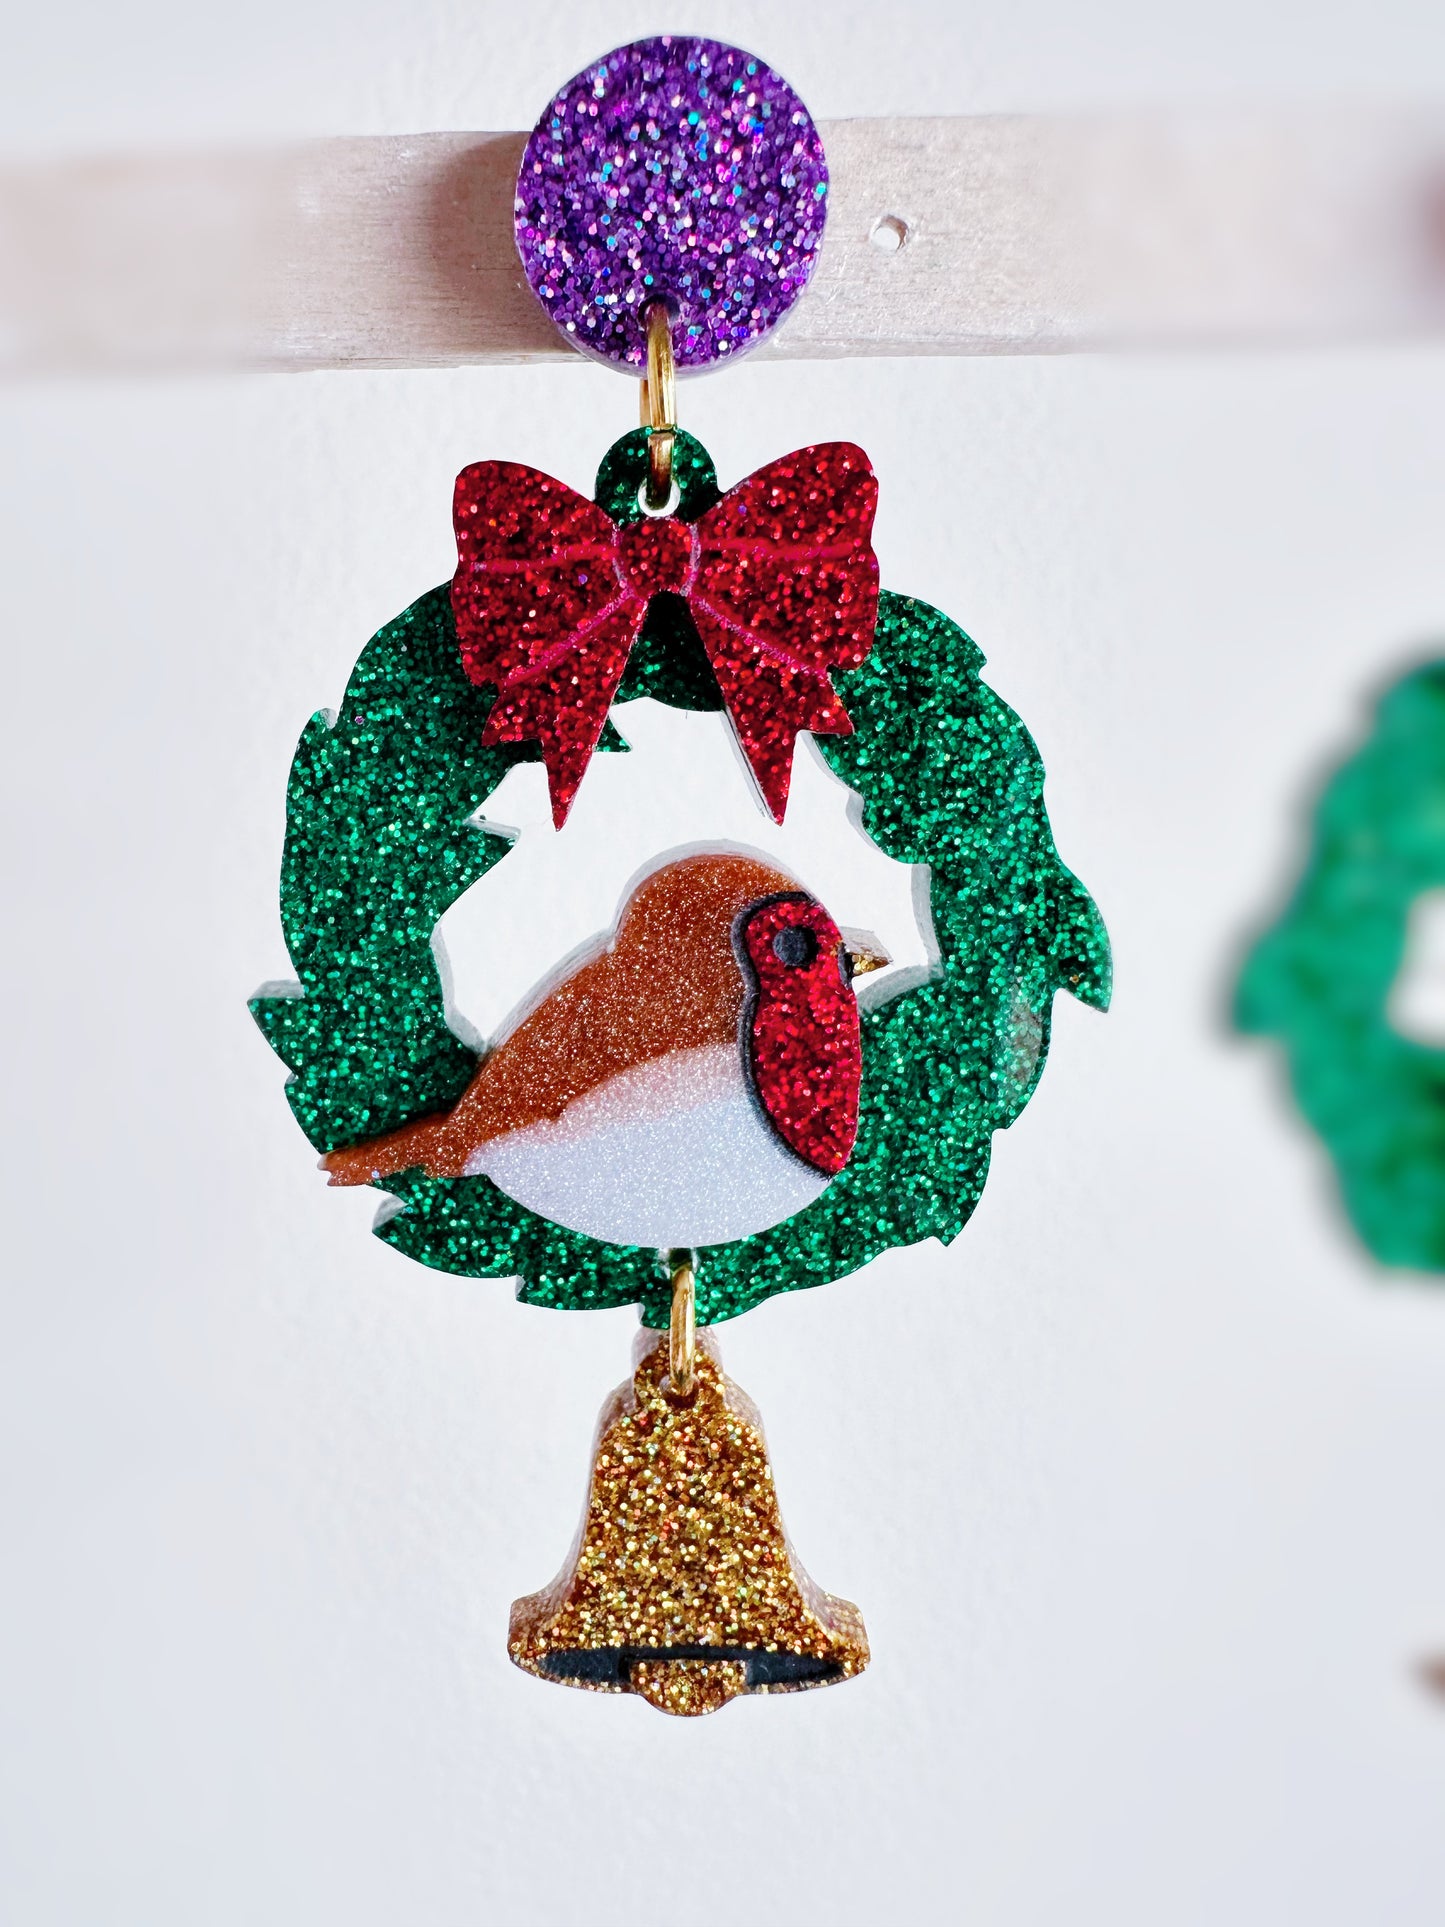 Christmas Robin Bird Resting on Wreath with Mini Bell Dangle Earring Mold